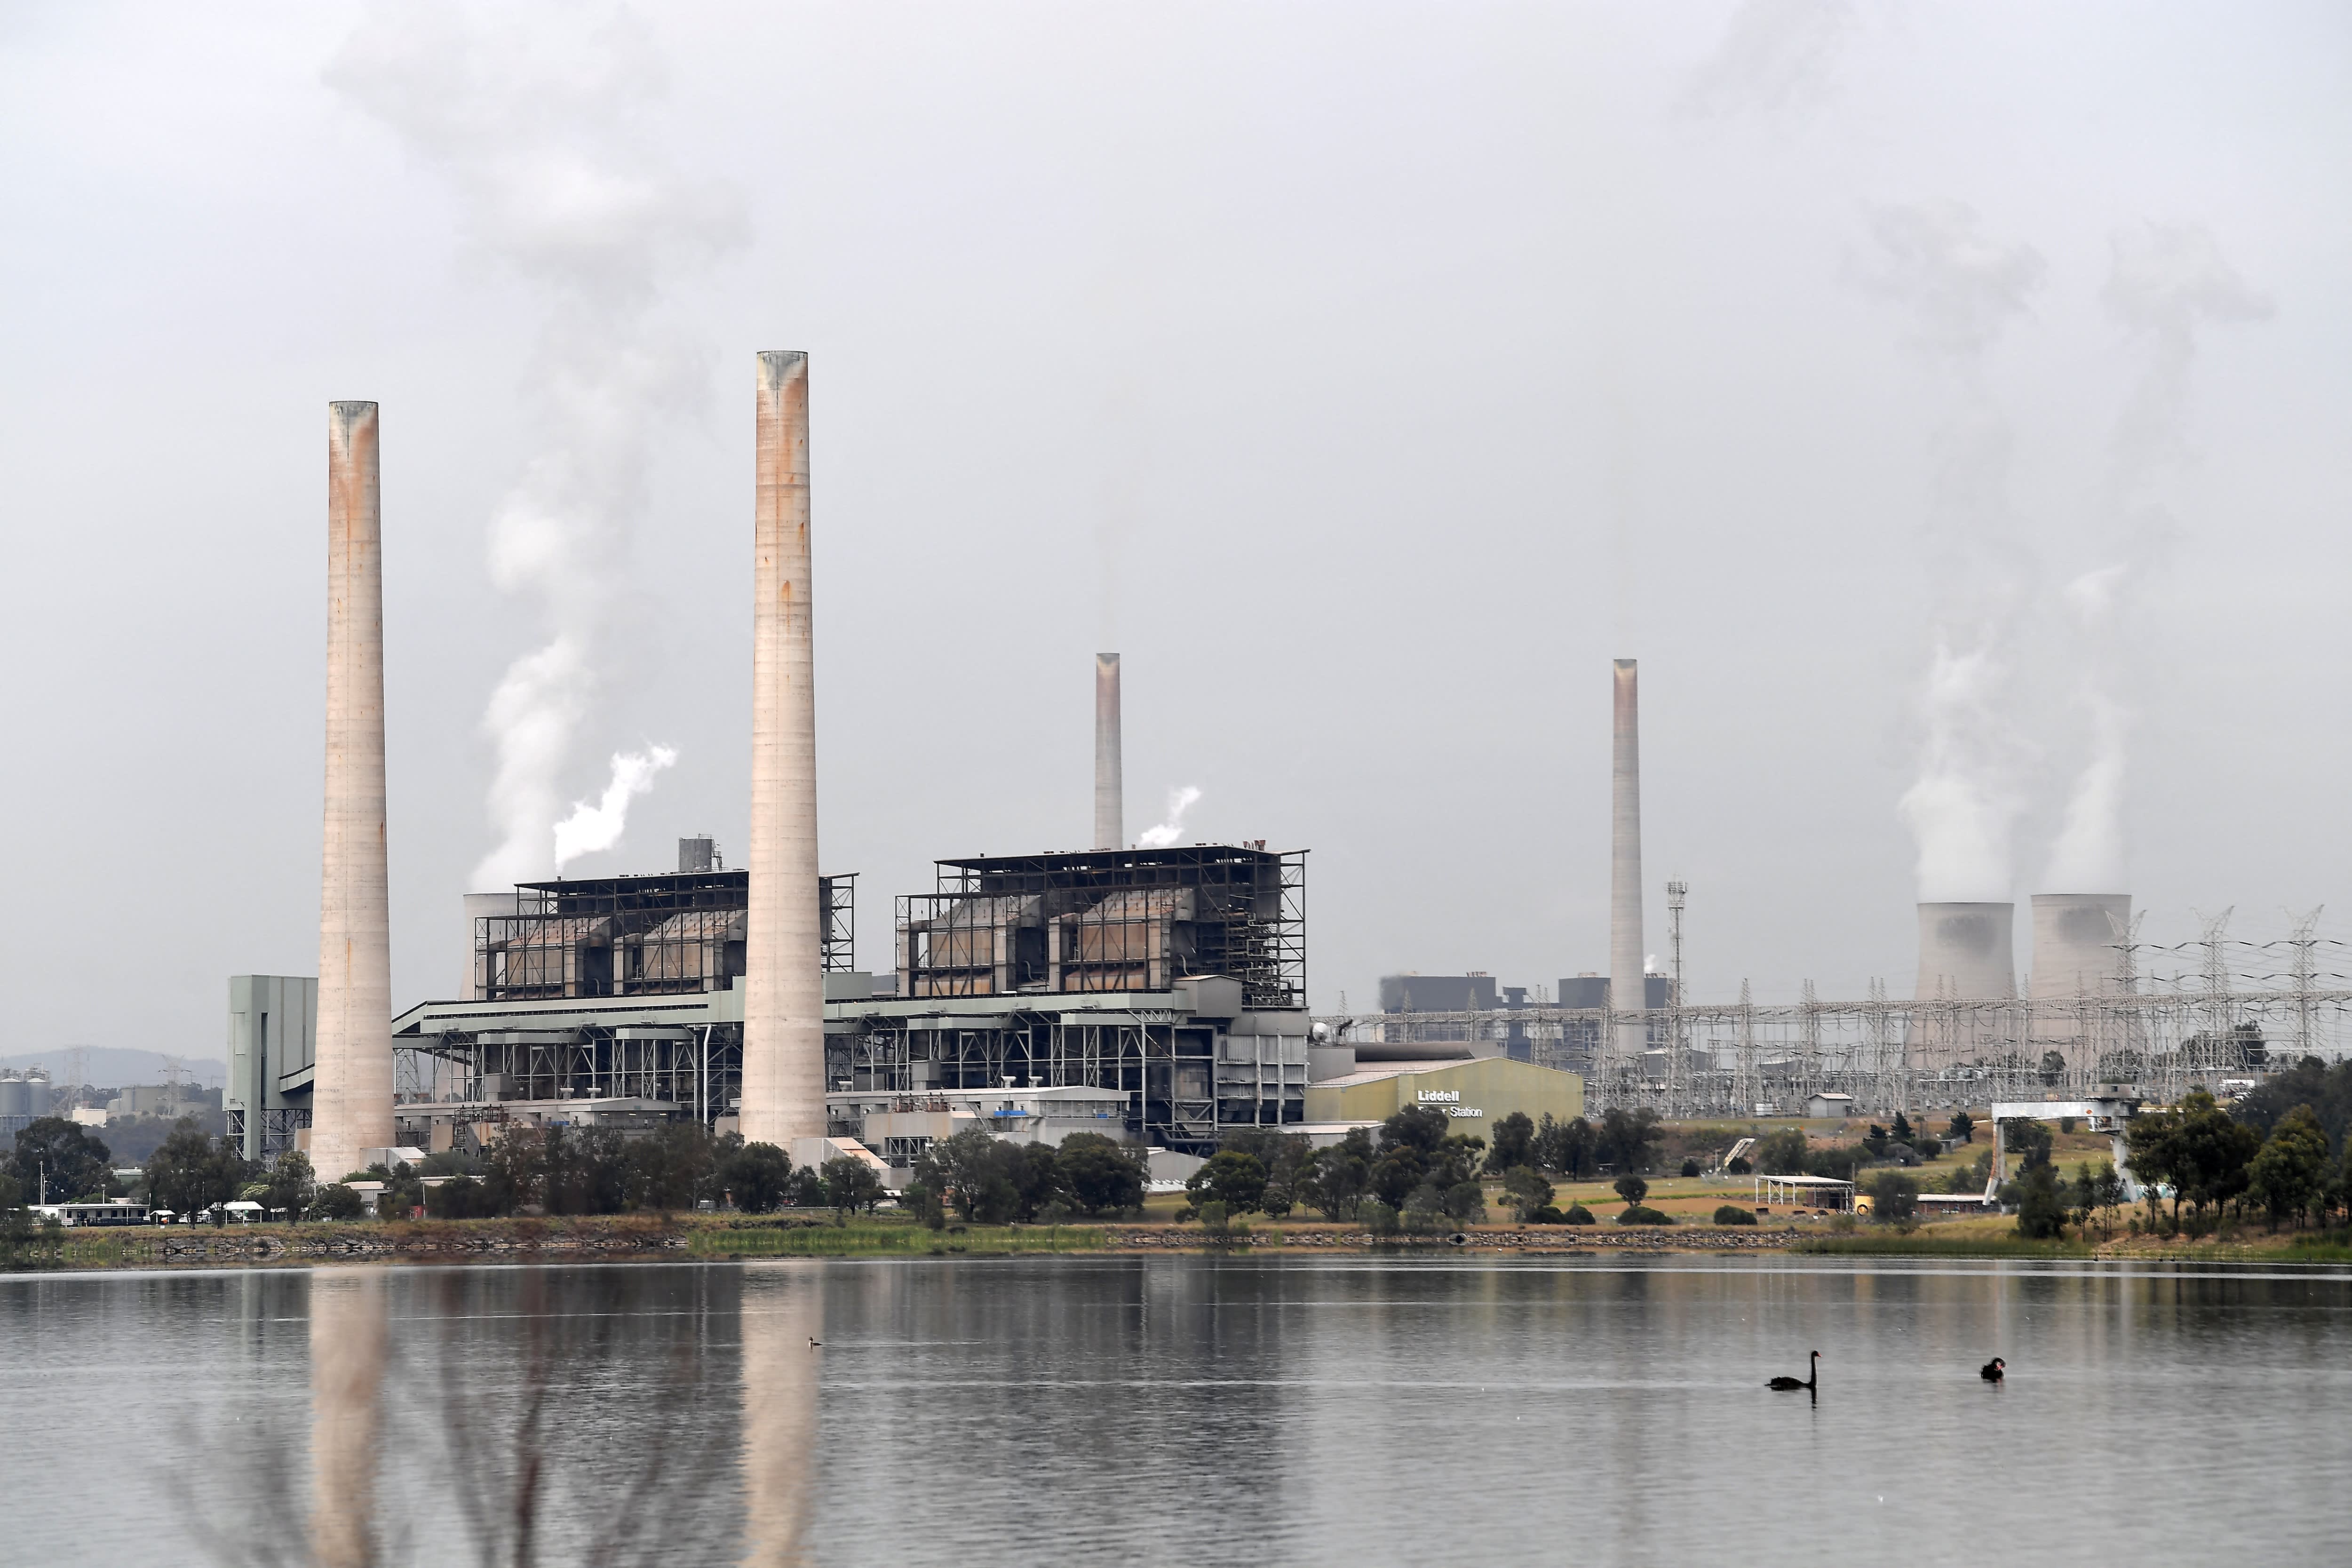 Australia's dismal climate record comes under COP26 spotlight - CNBC